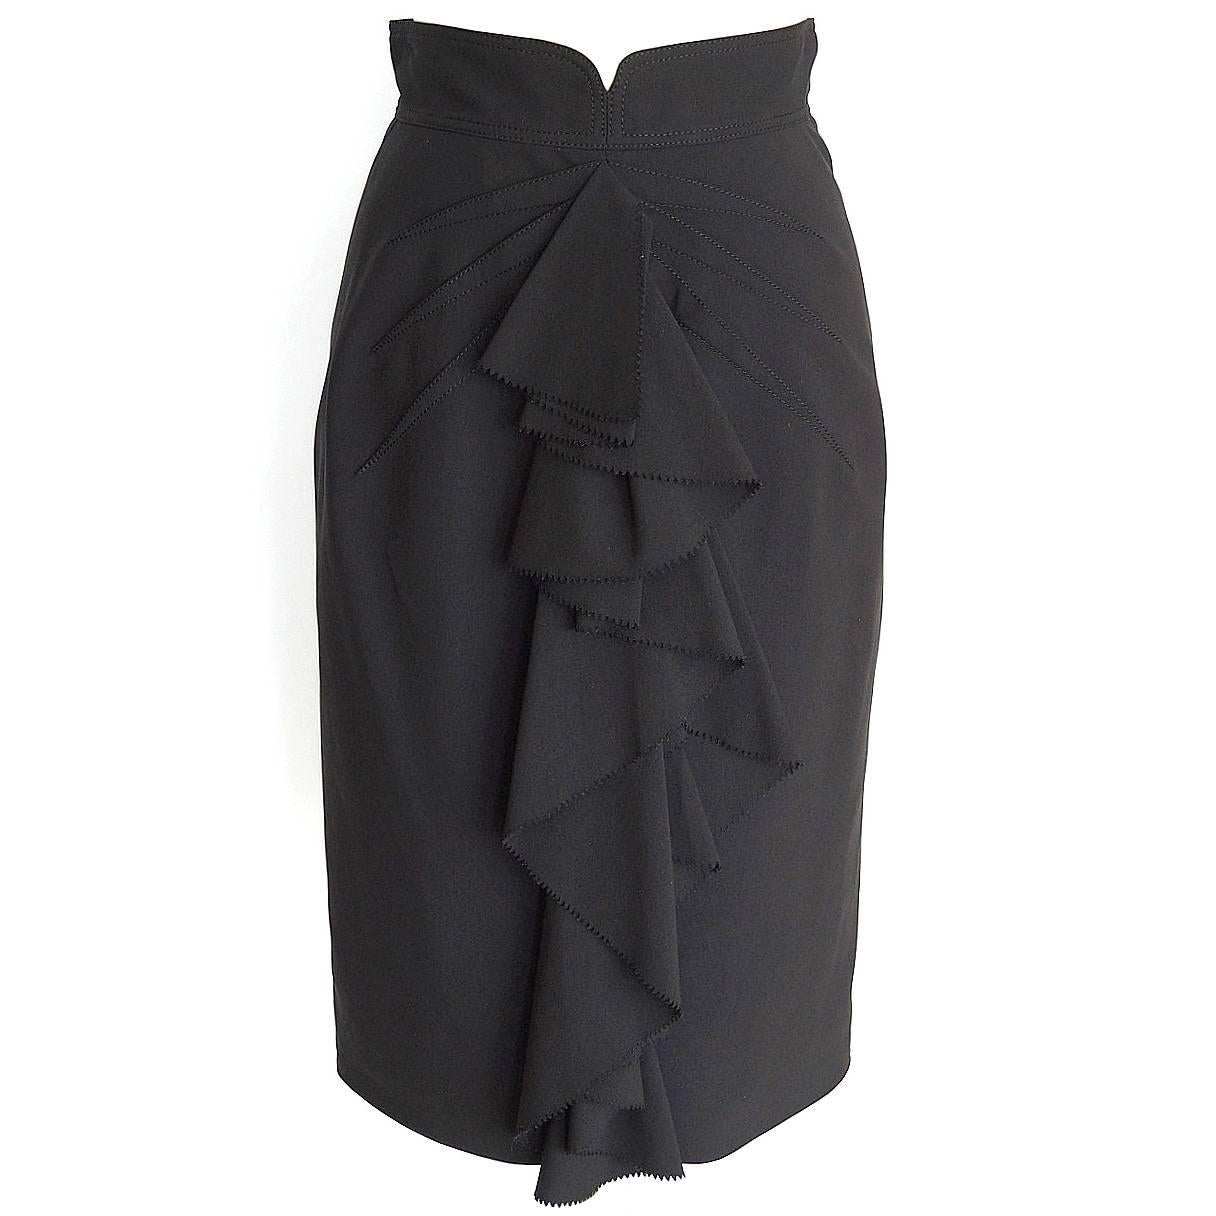 ZAC POSEN Skirt Beautifully Styled Ruffled Pencil 4 nwt